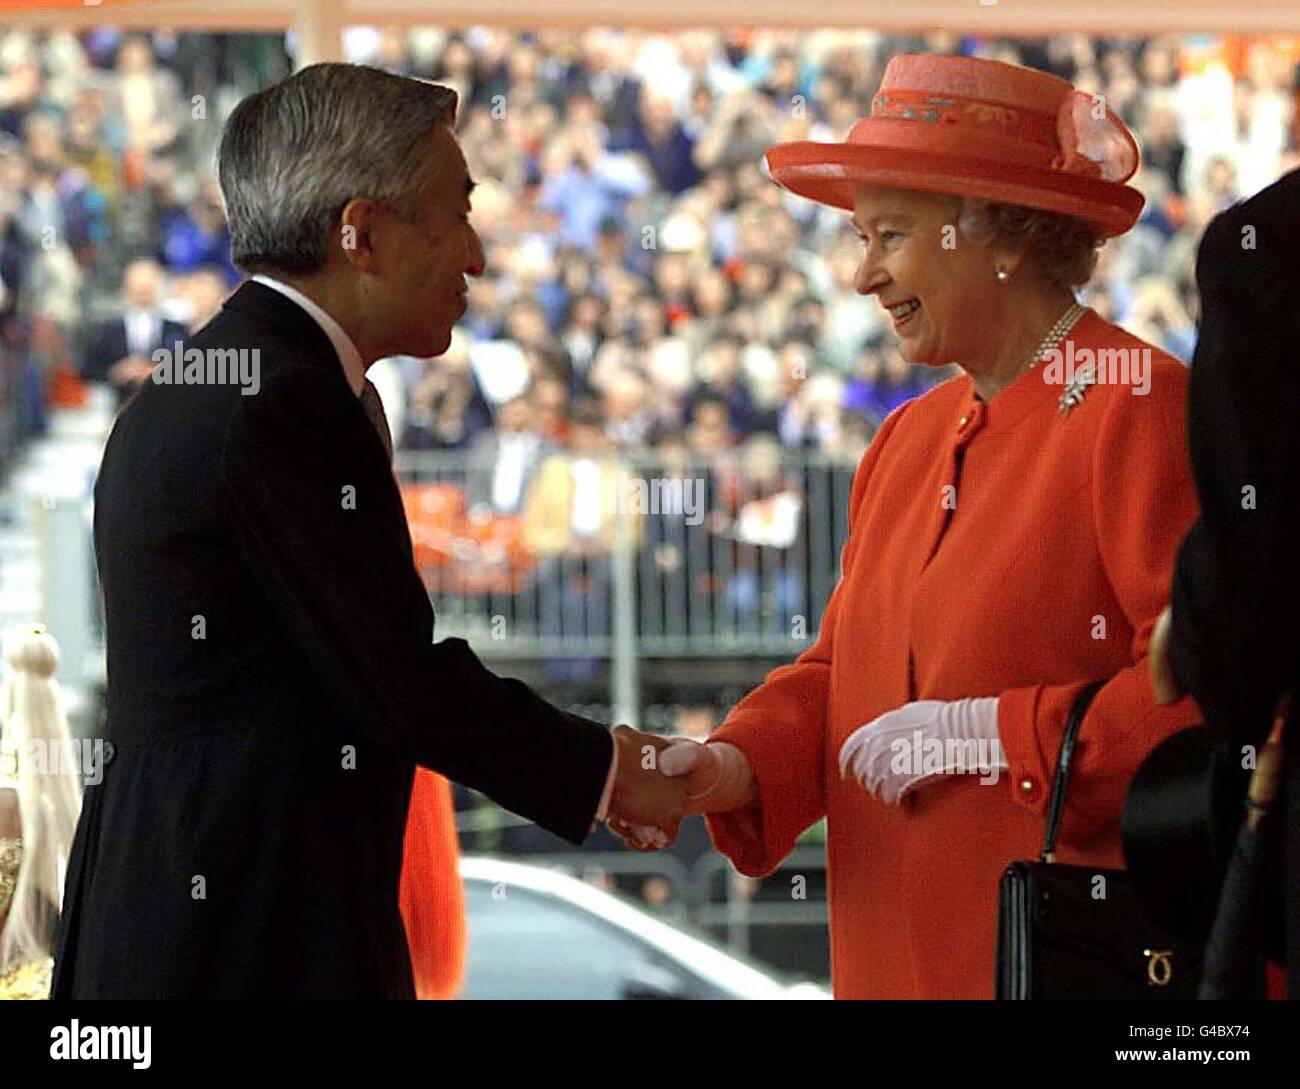 Queen&Emperor rota Stock Photo